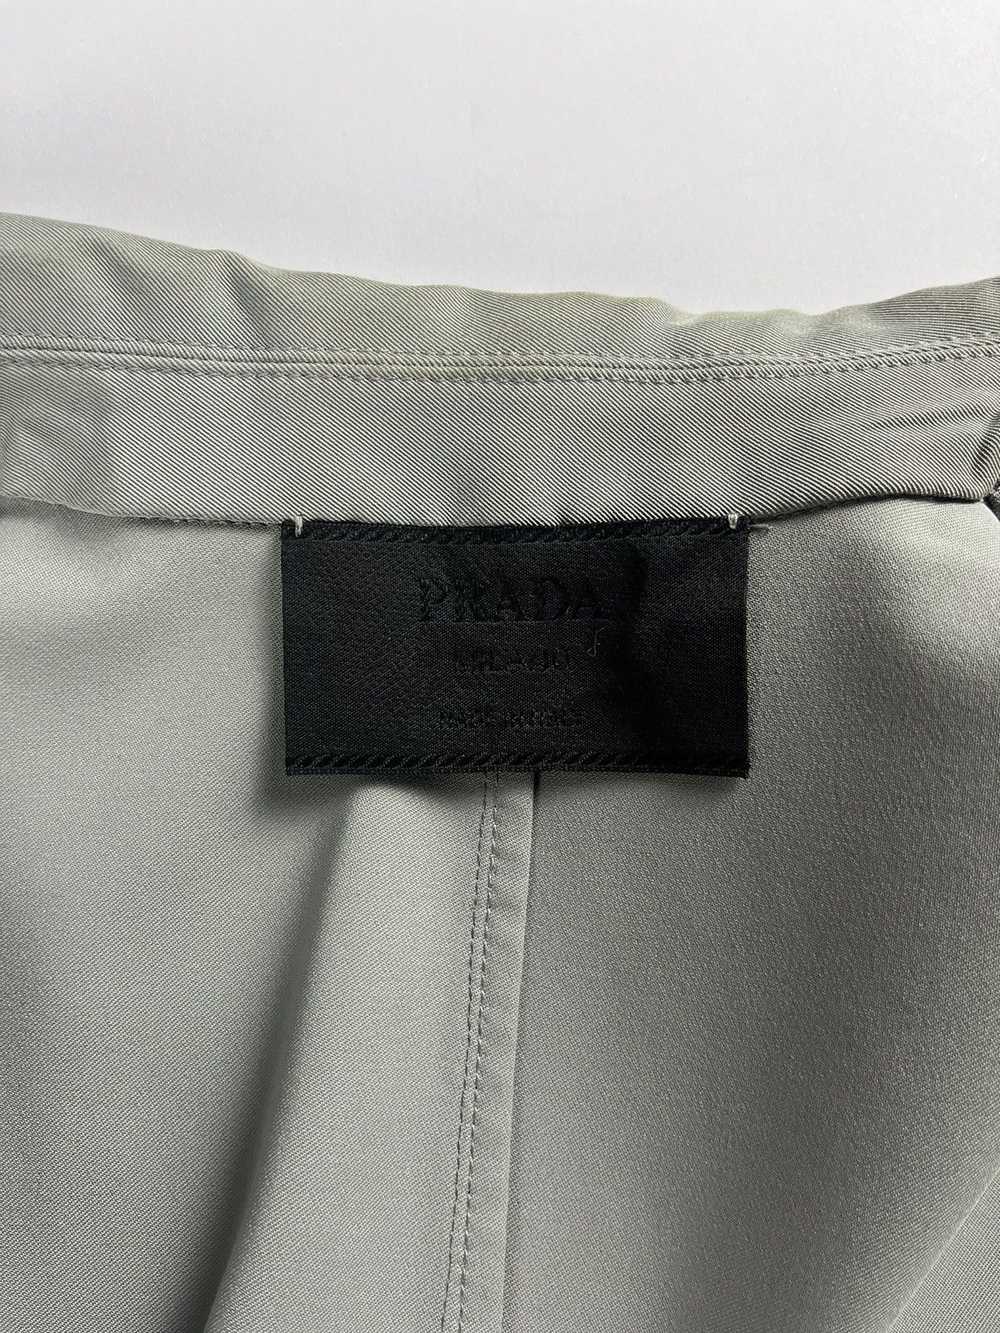 Prada Prada Strapped Nylon Jacket FW 1998 - image 8